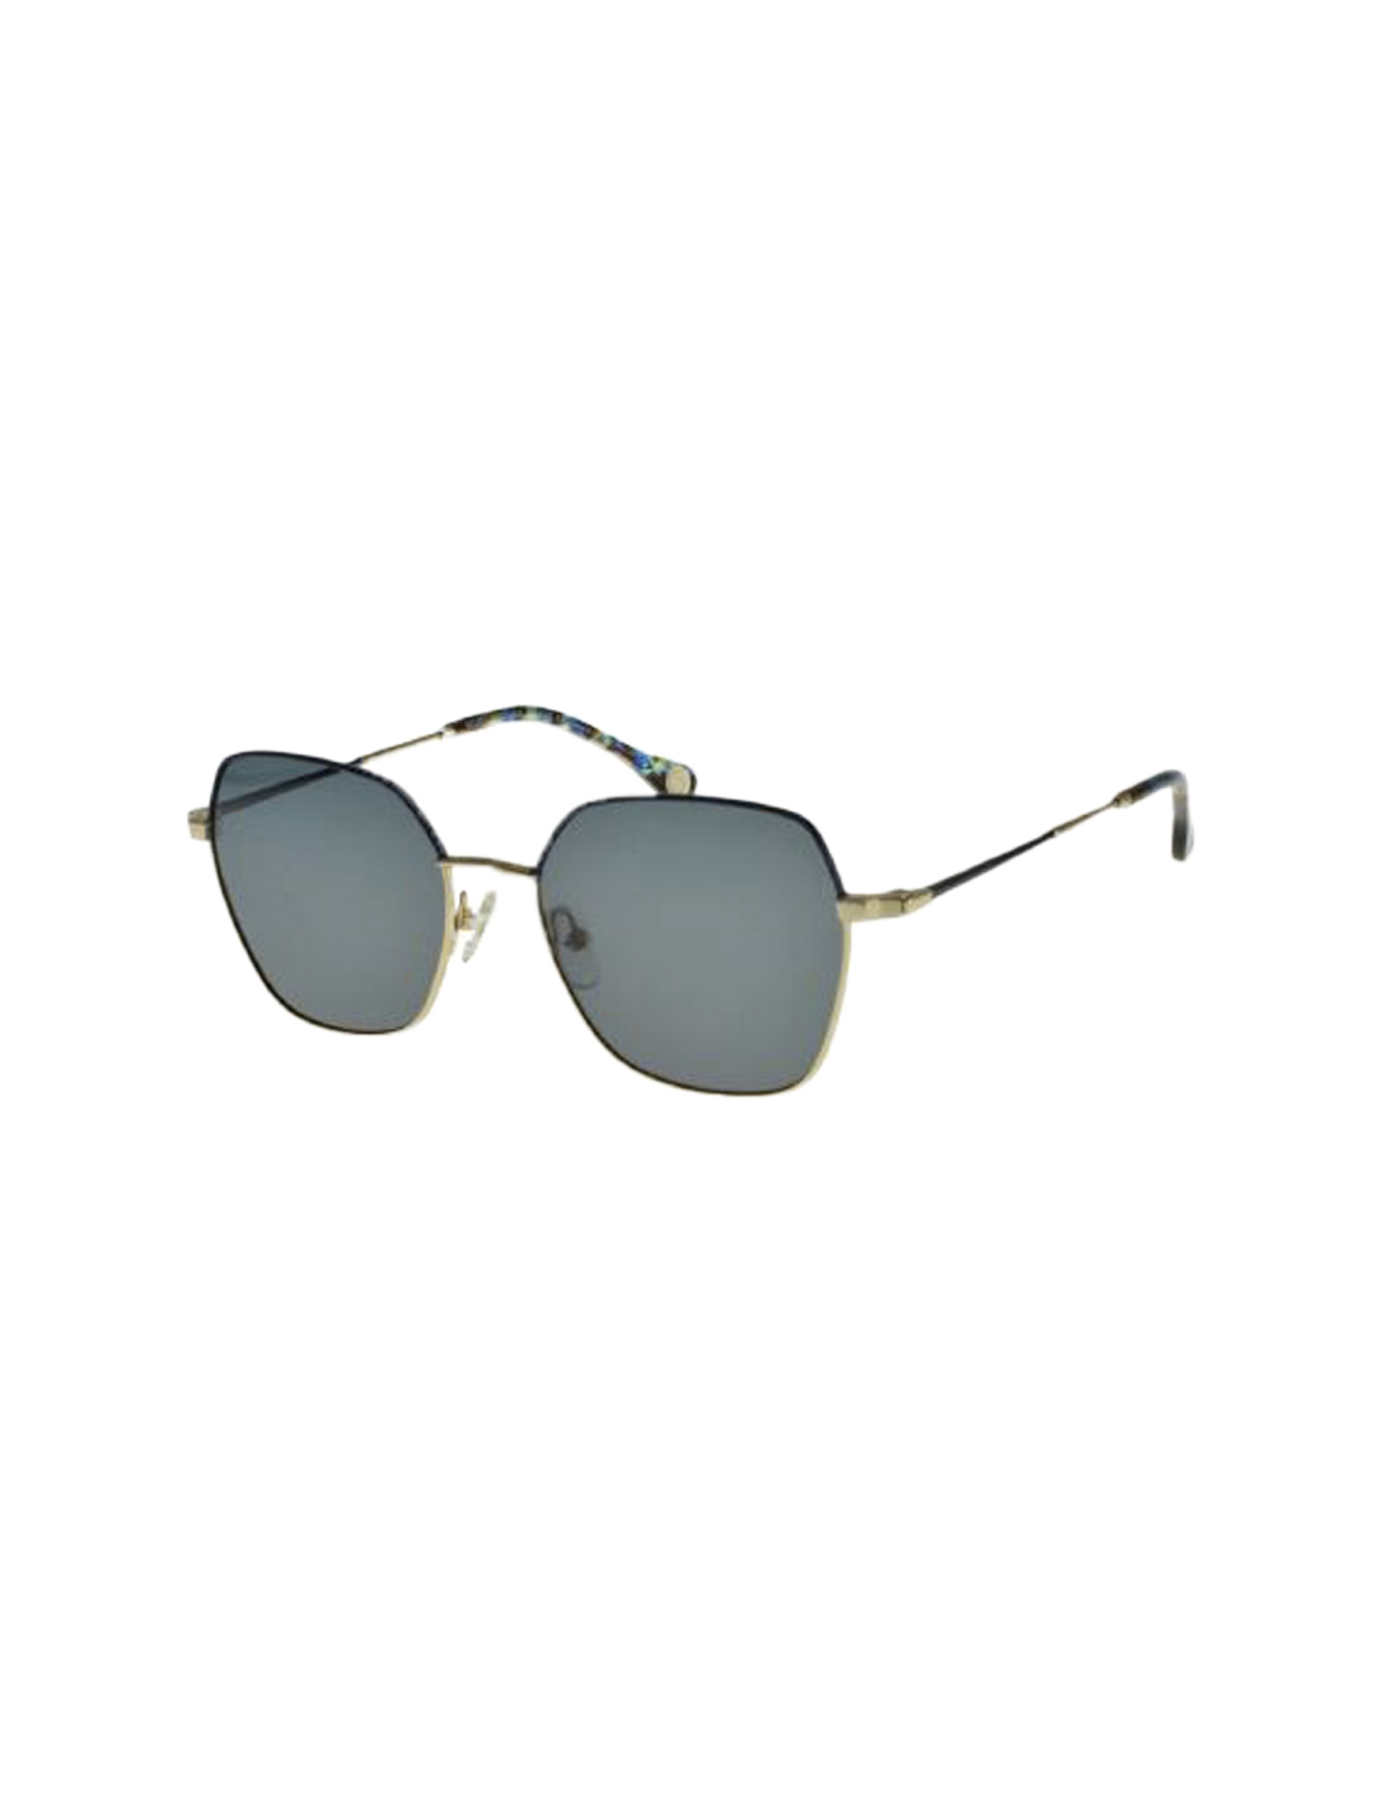 sunglasses-adele-blue-gold